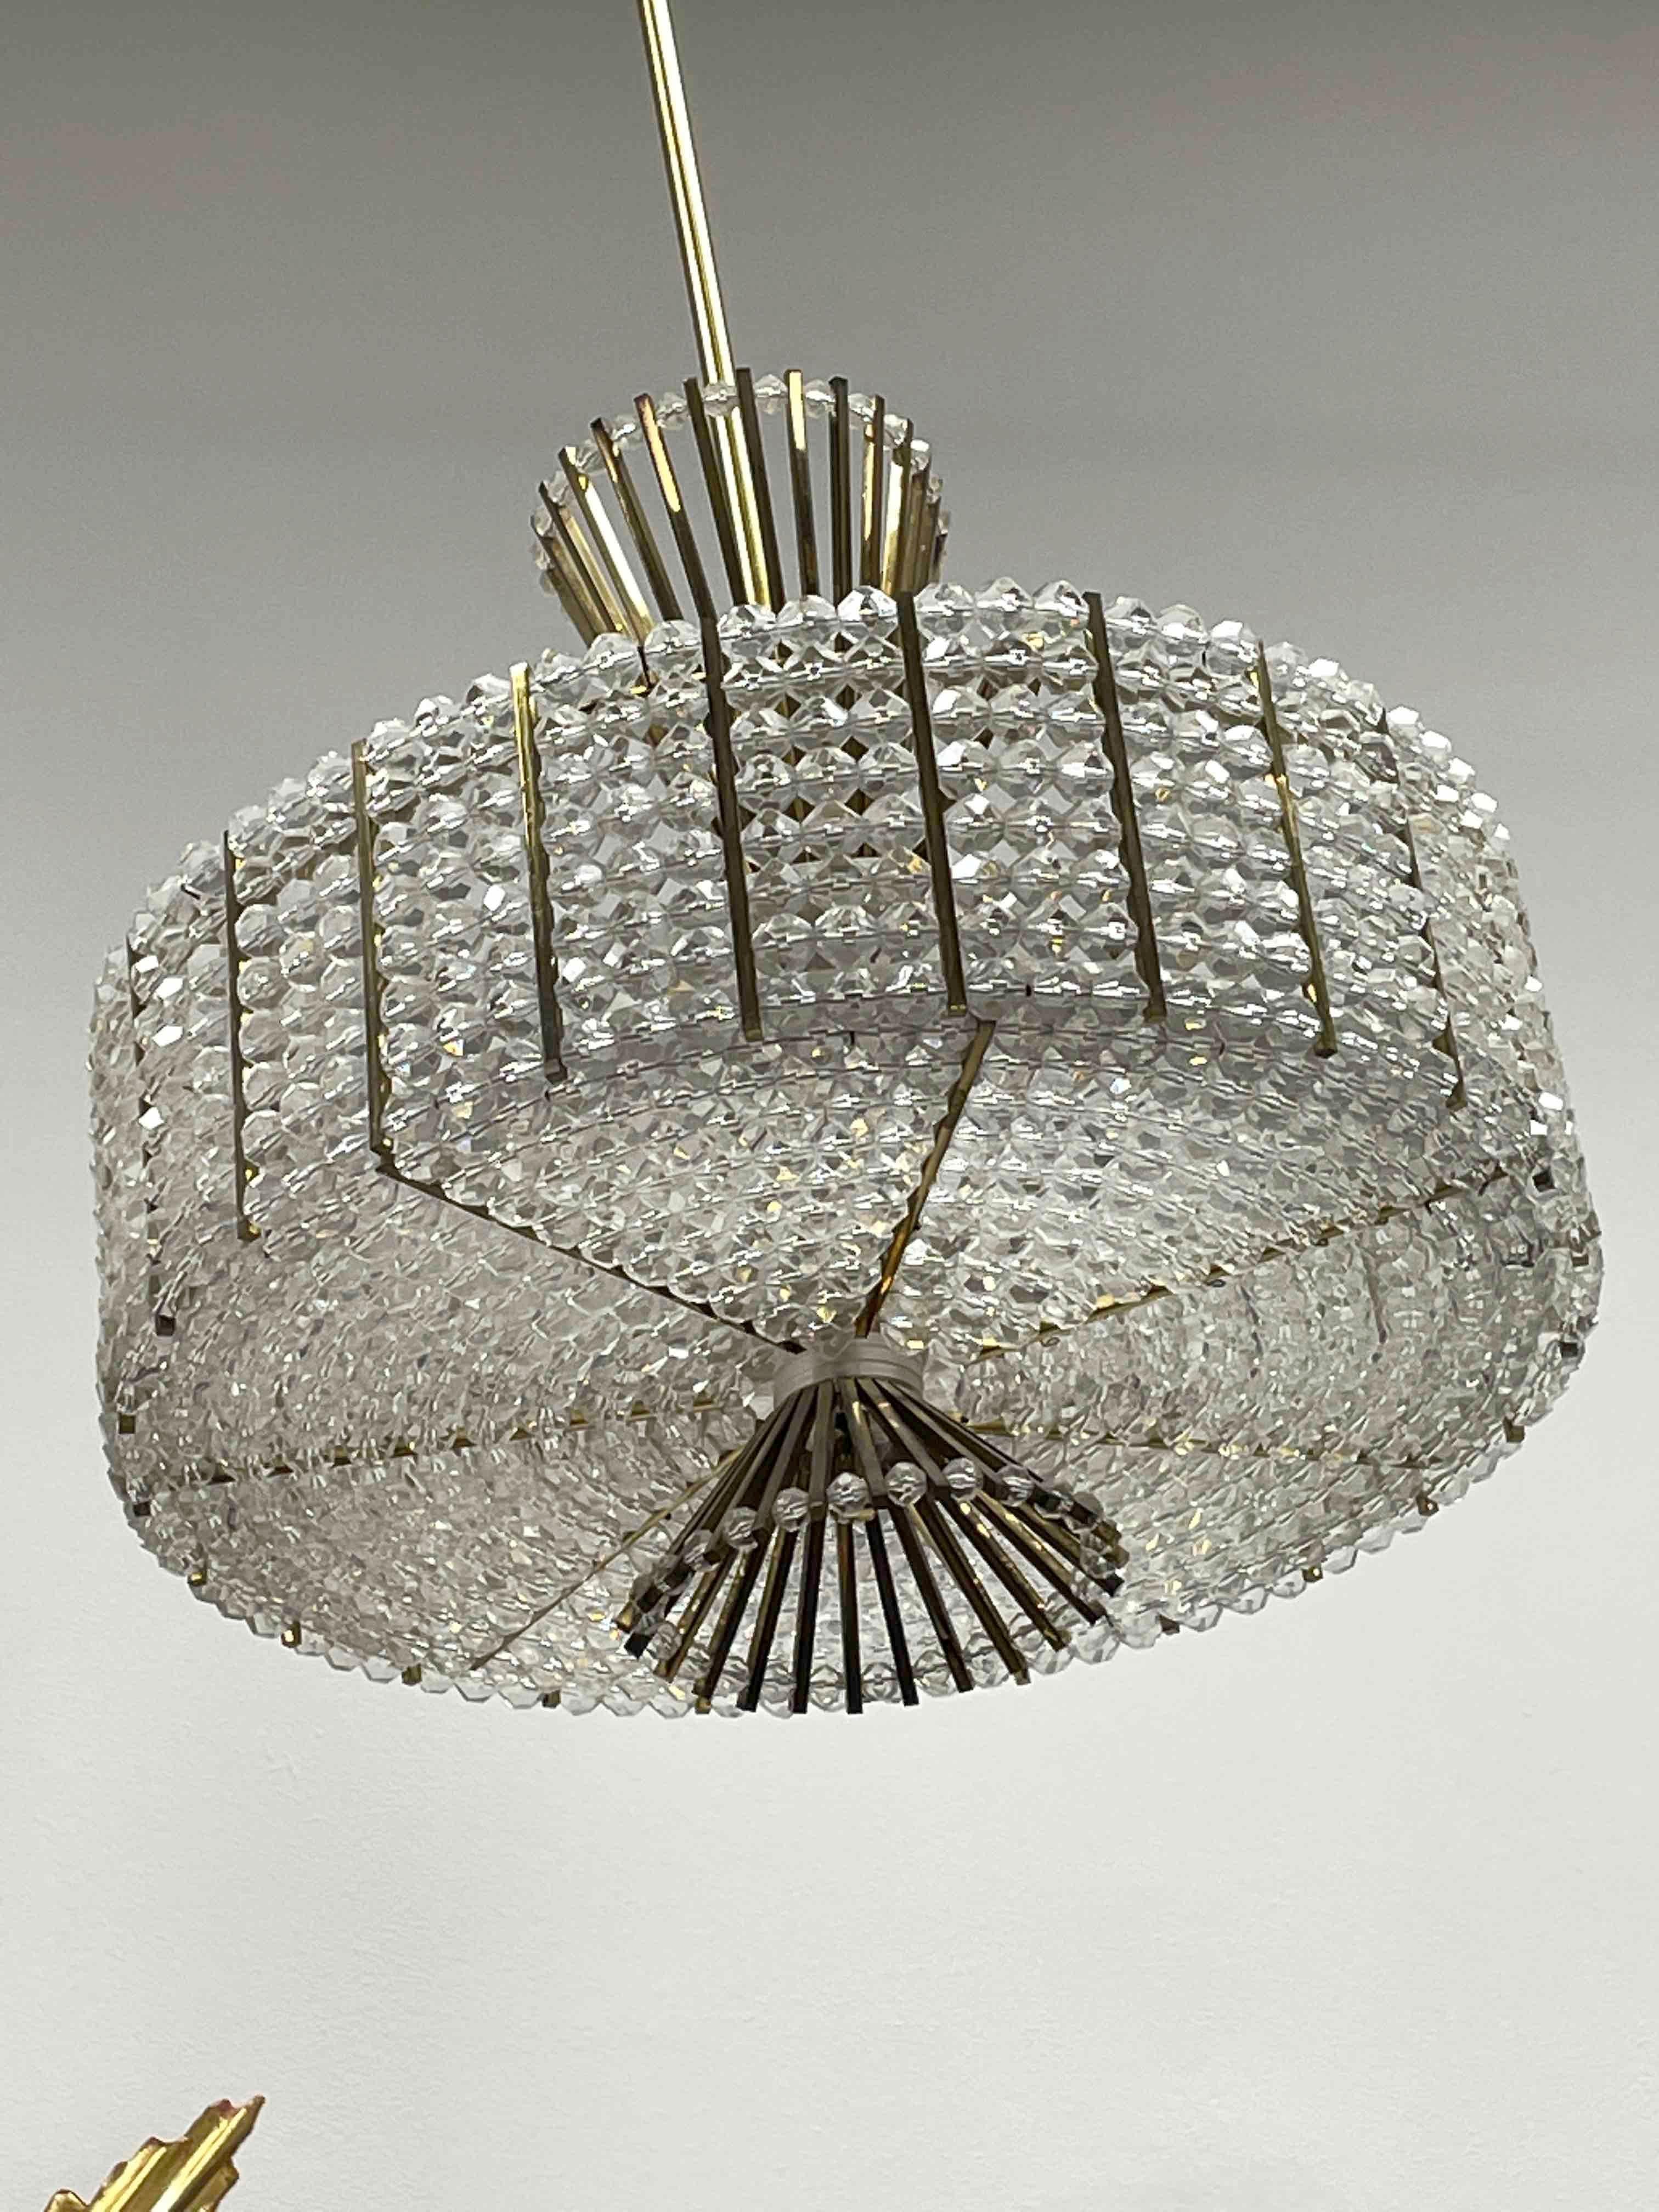 Austrian Emil Stejnar Chandelier Rupert Nikoll, Brass Crystal Glass, Lucite Vienna, 1950s For Sale